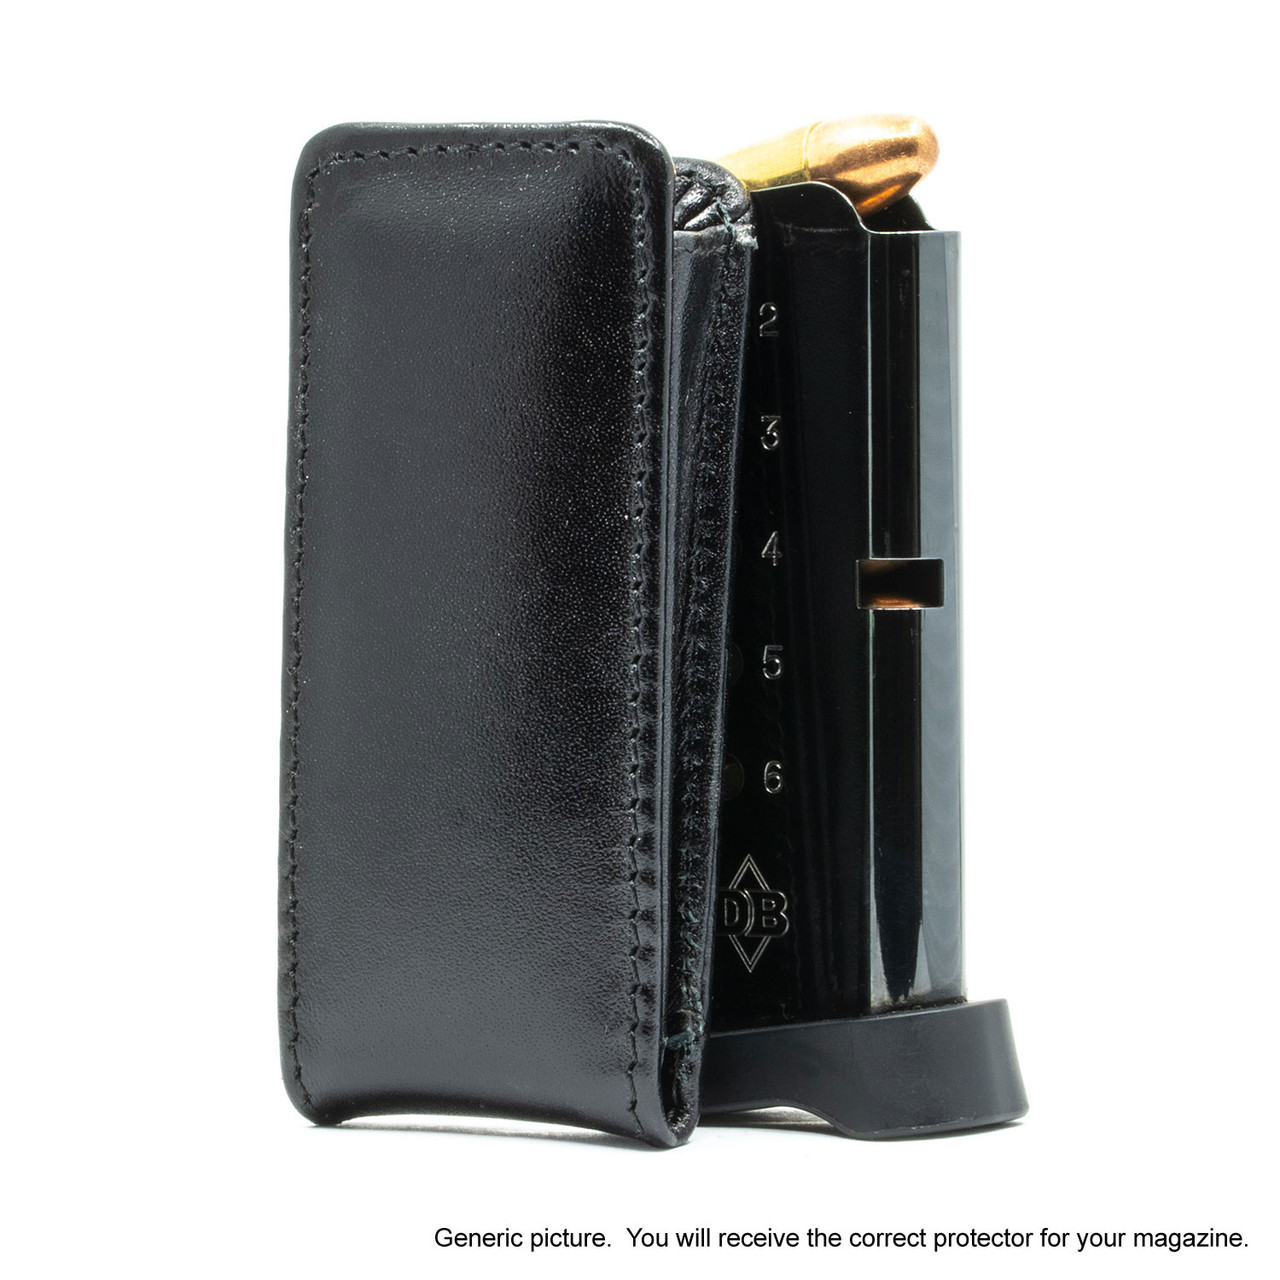 Taurus G3c Holsters Black Leather Magazine Pocket Protector